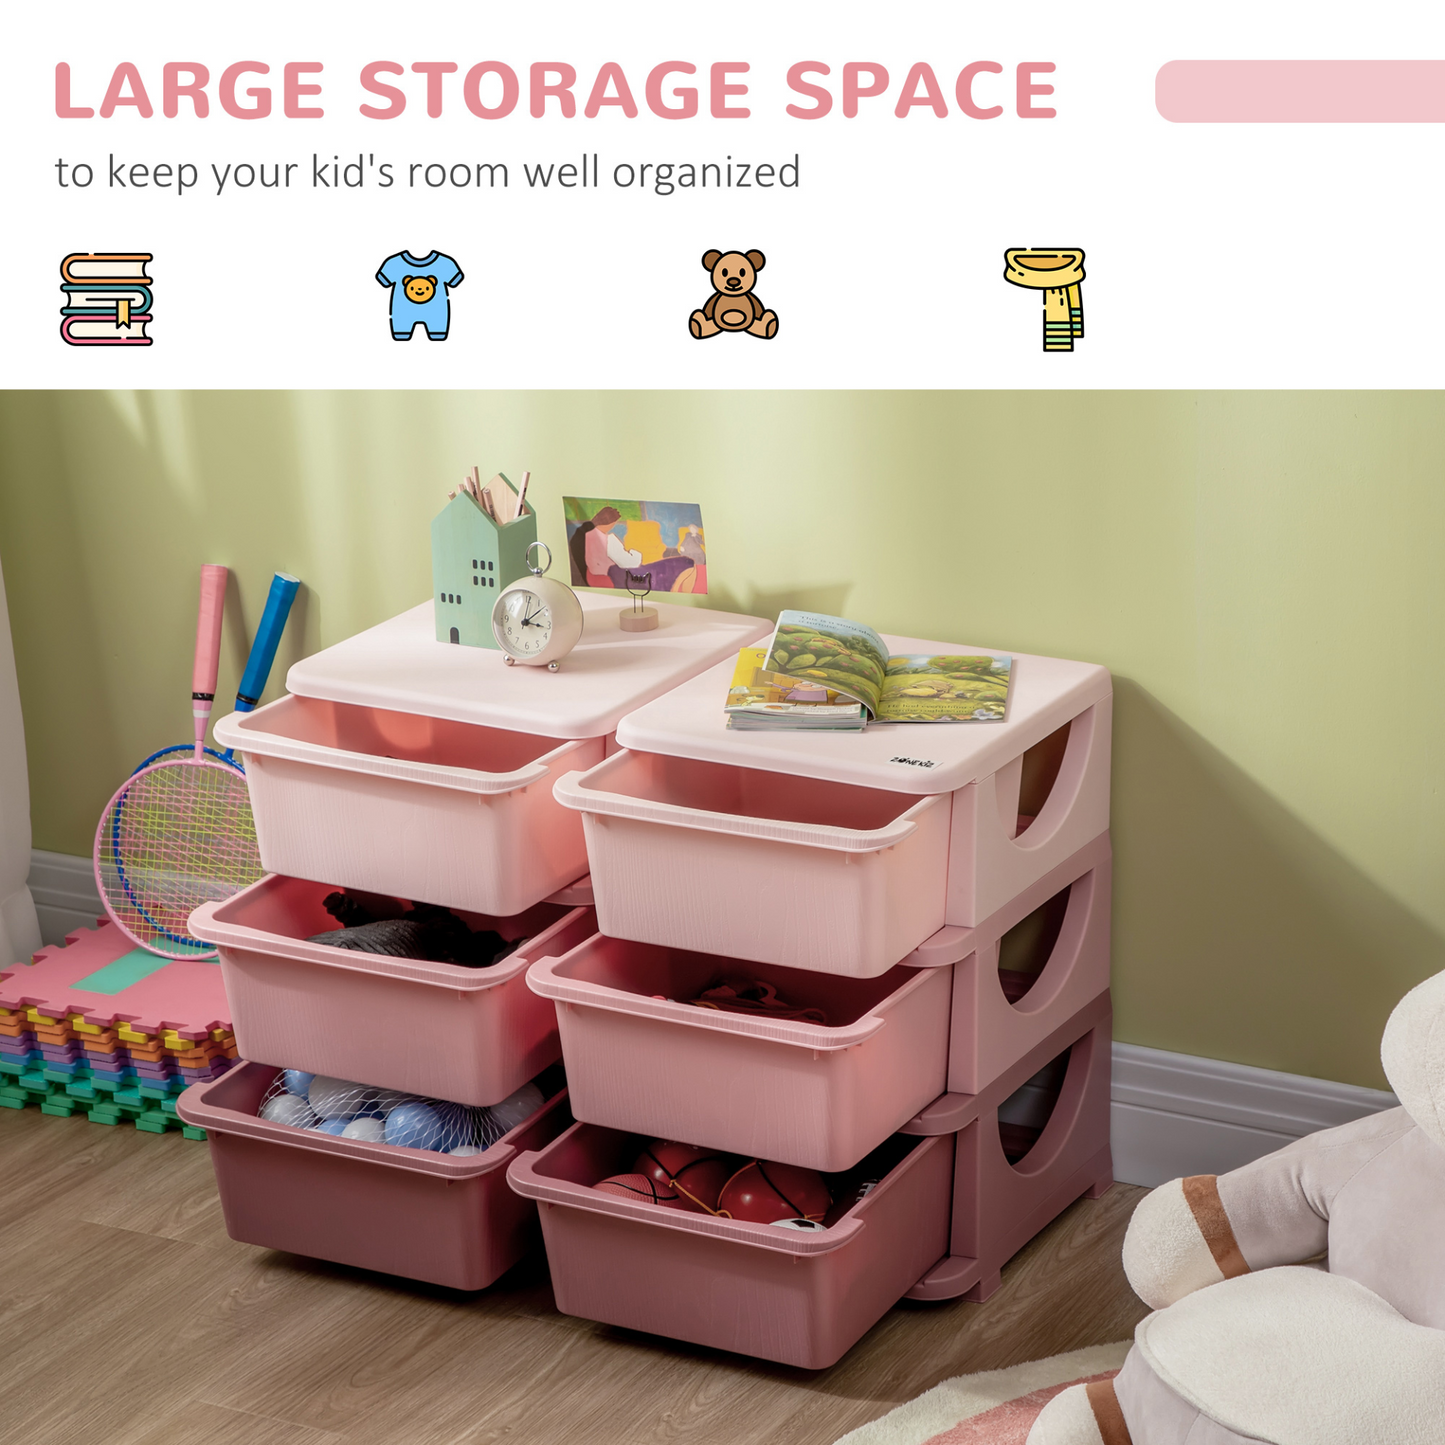 HOMCOM Kids Three-Tier Storage Unit Toy Storage Organiser Vertical Dresser Tower, for Nursery, Playroom, Classroom - Pink